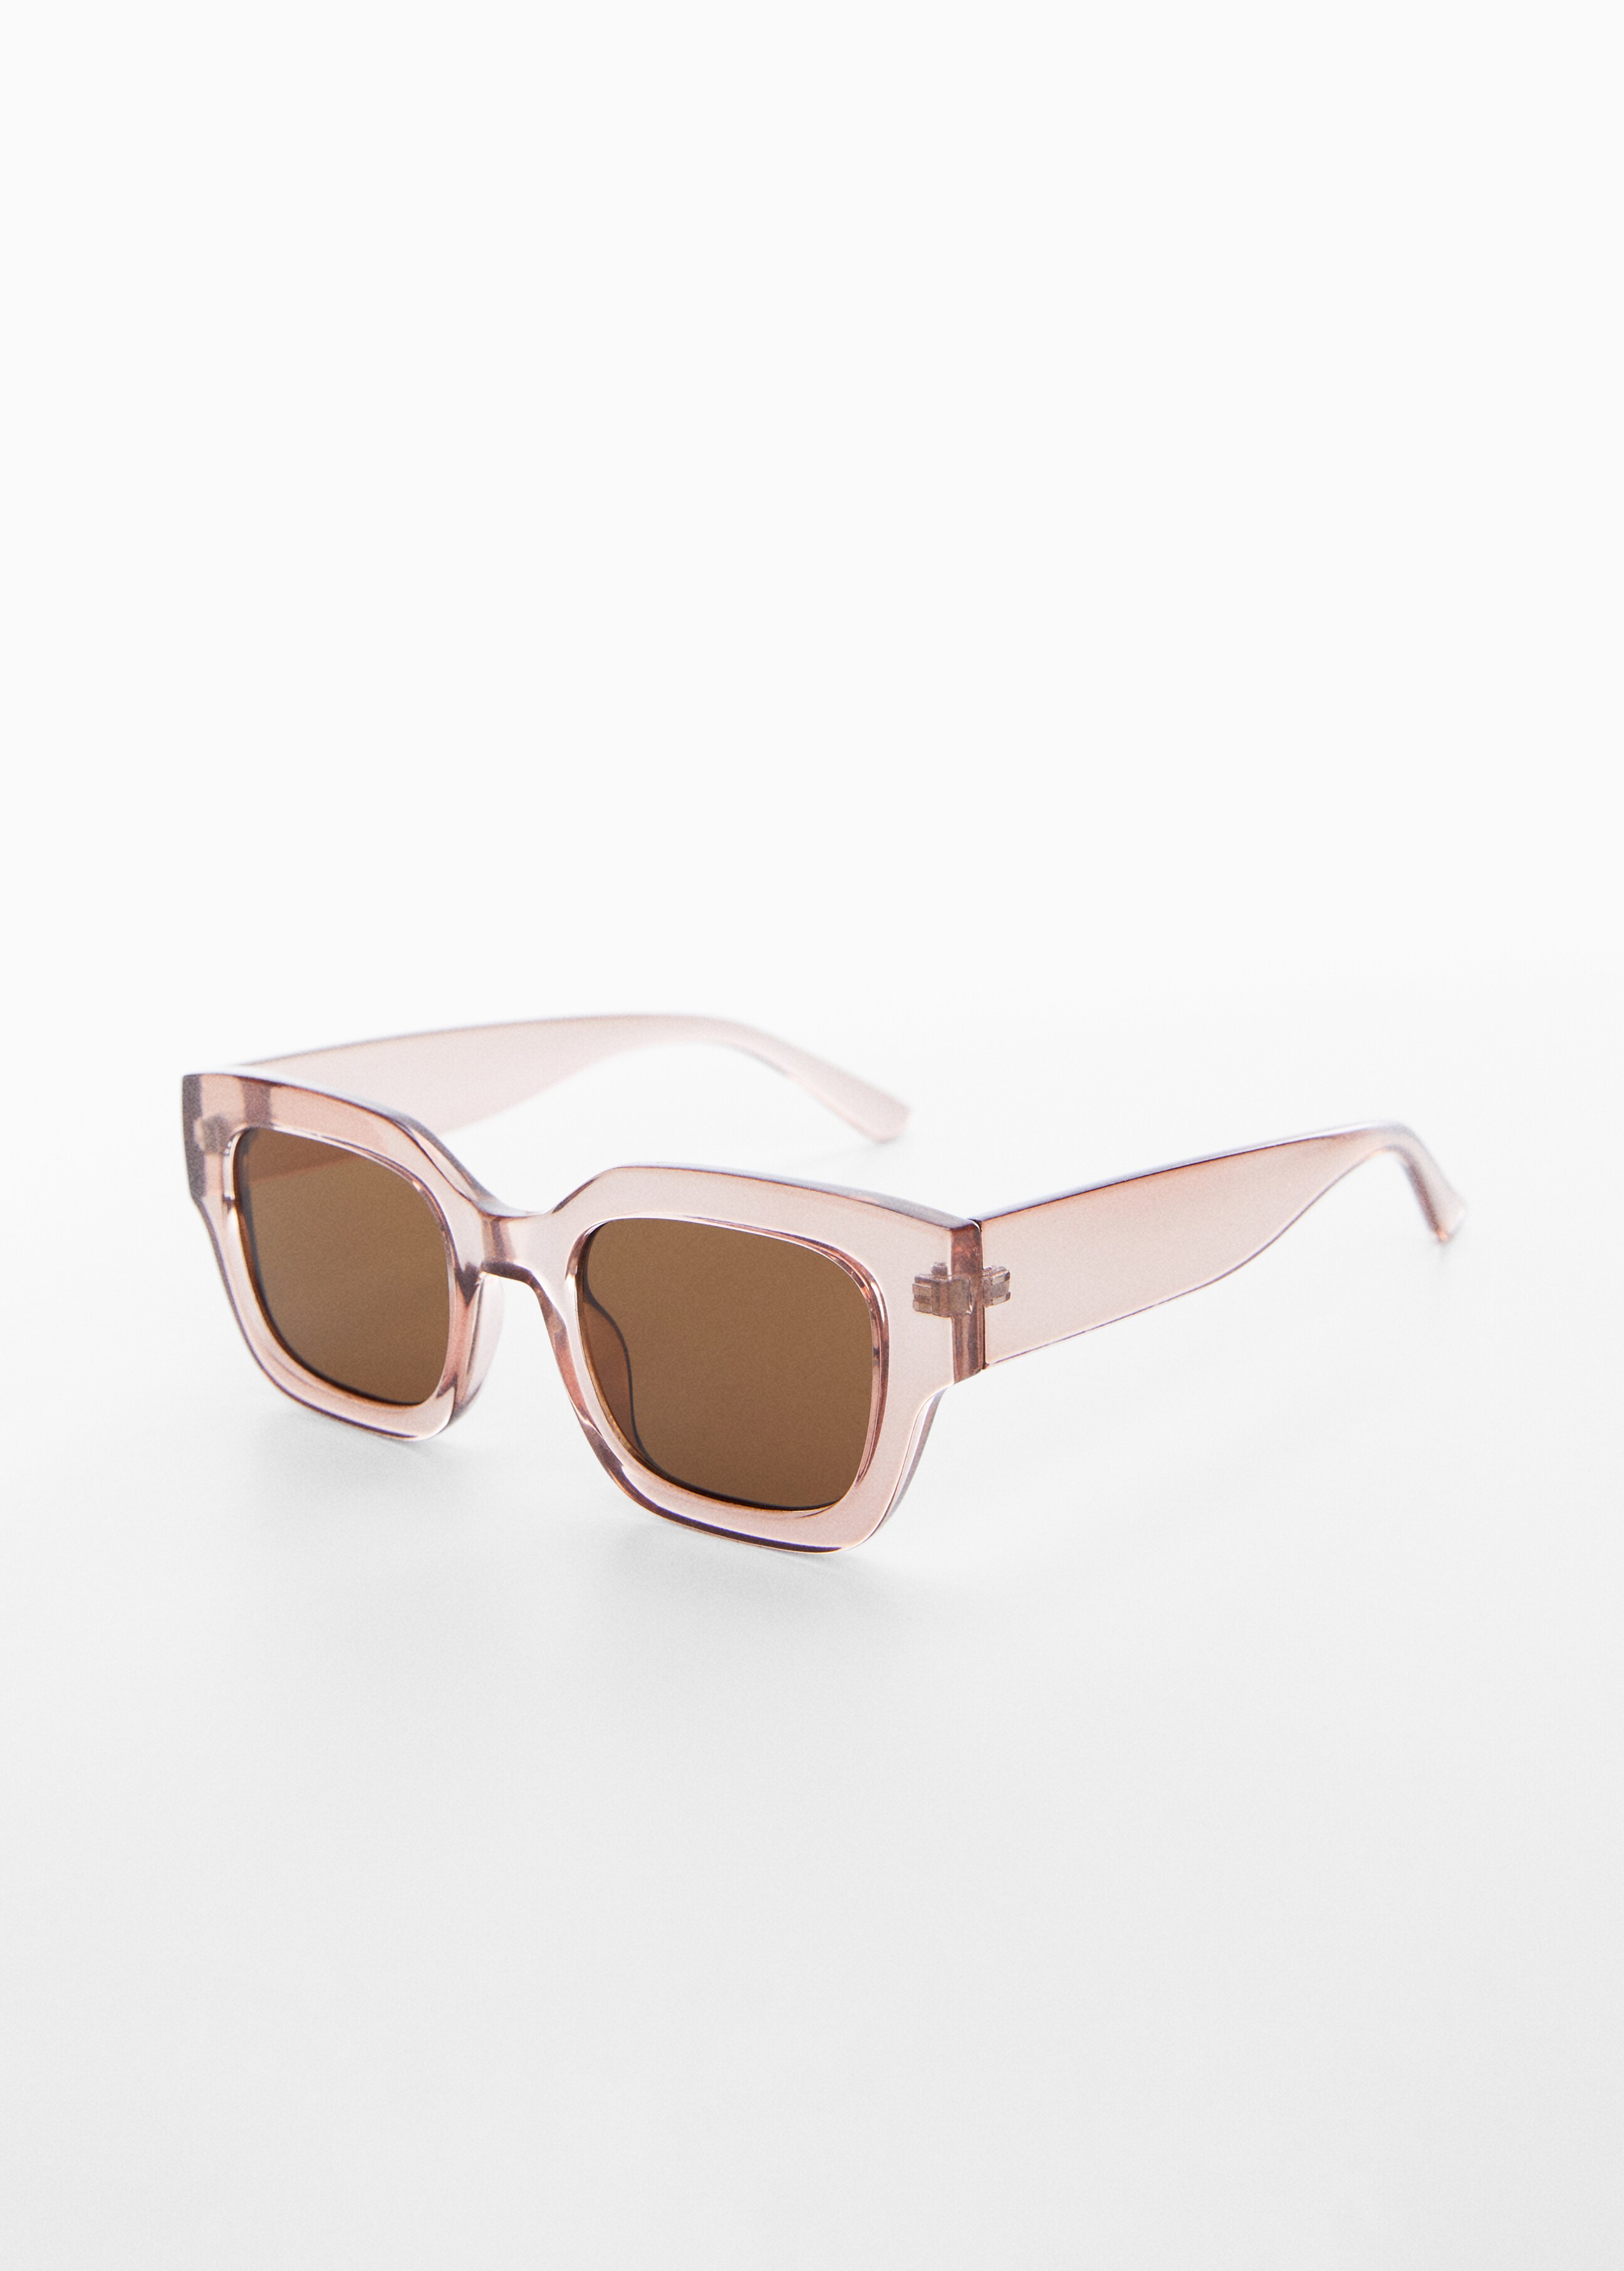 Squared frame sunglasses - Medium plane